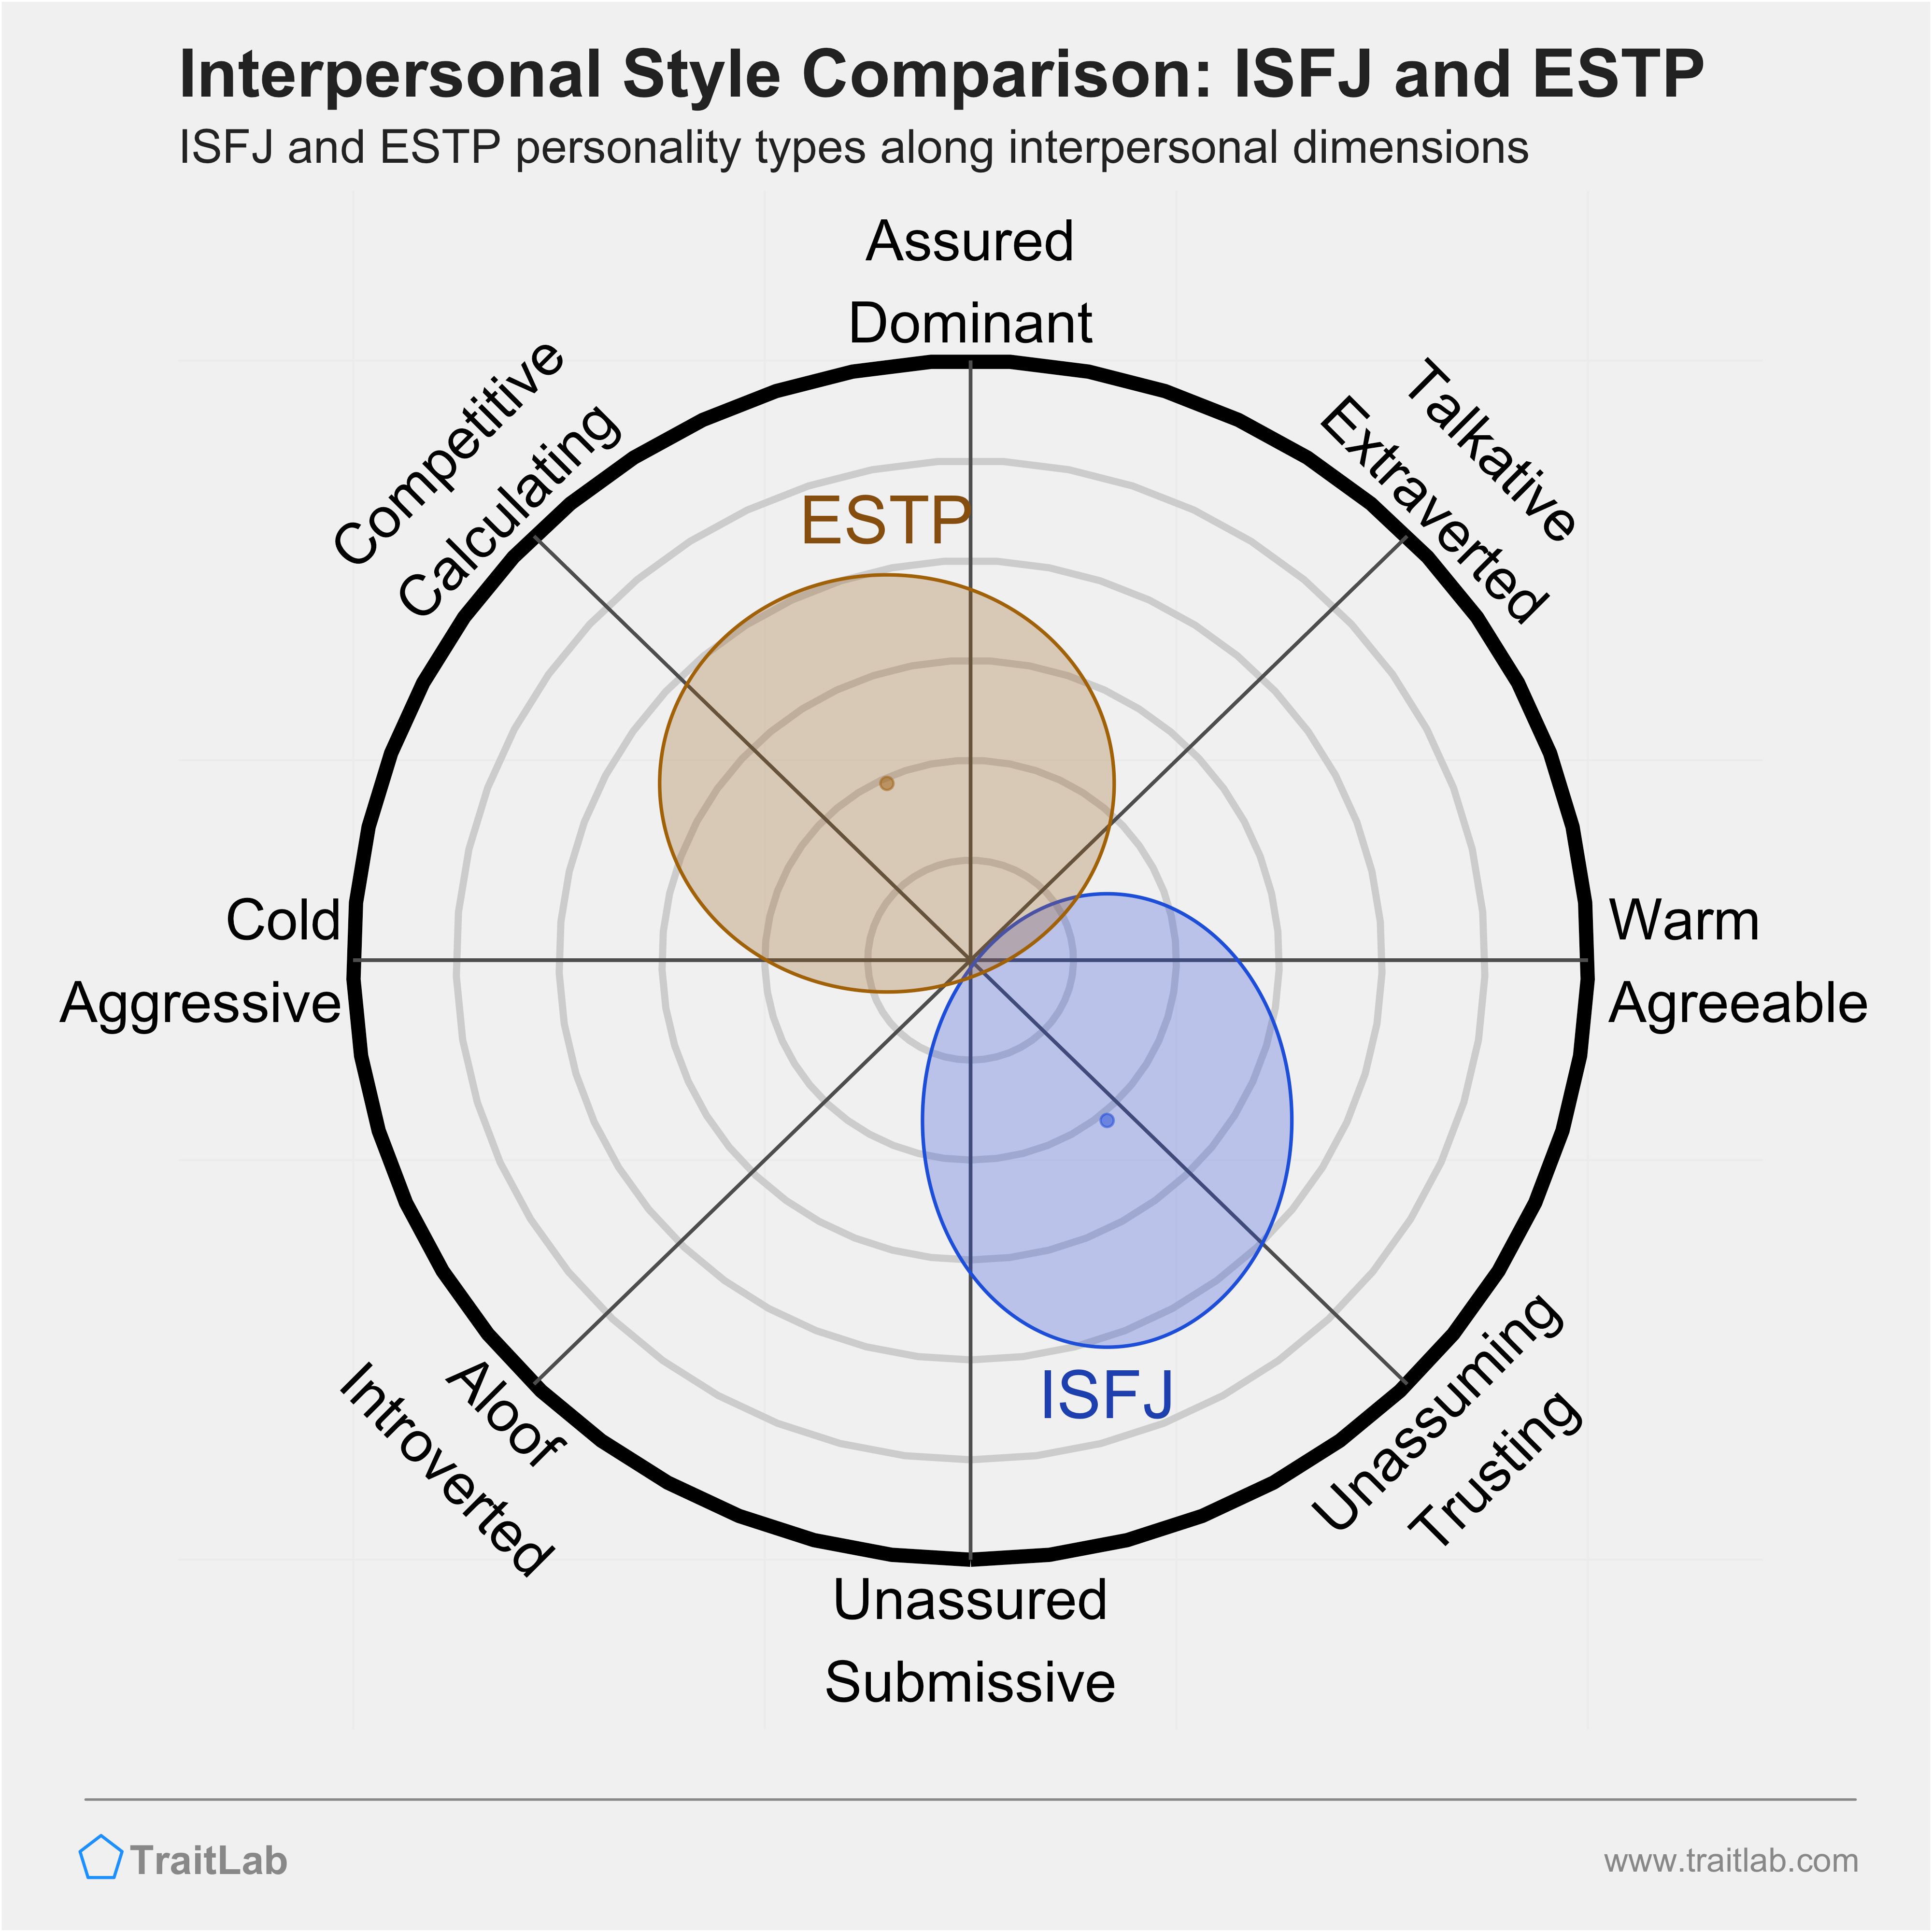 ISFJ and ESTP comparison across interpersonal dimensions